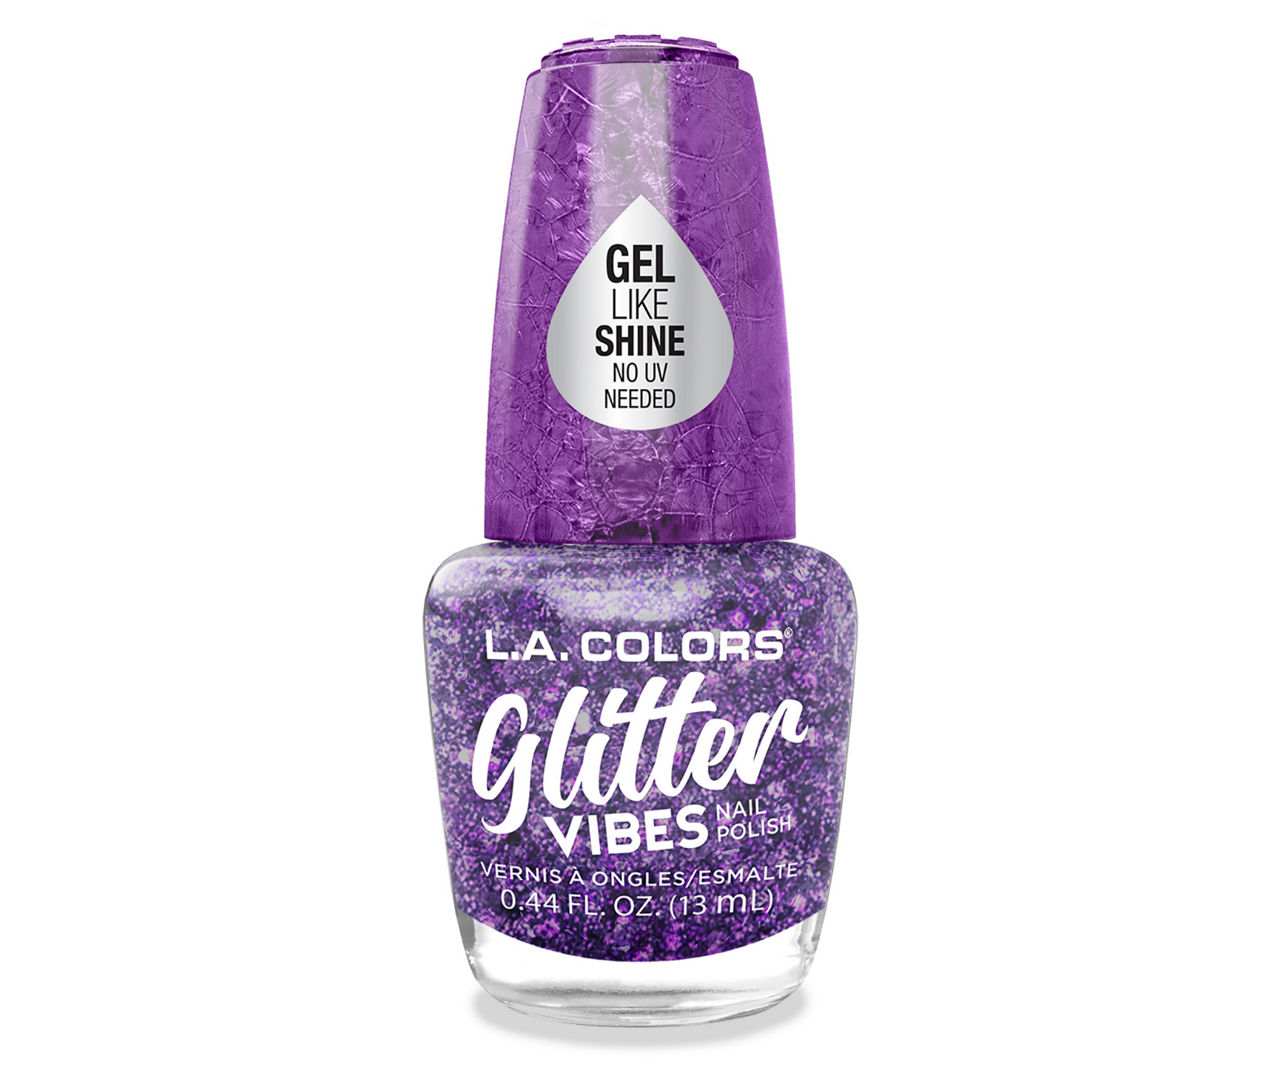 Glitter Vibes Nail Polish in Purple-Razzi, 0.44 Oz.